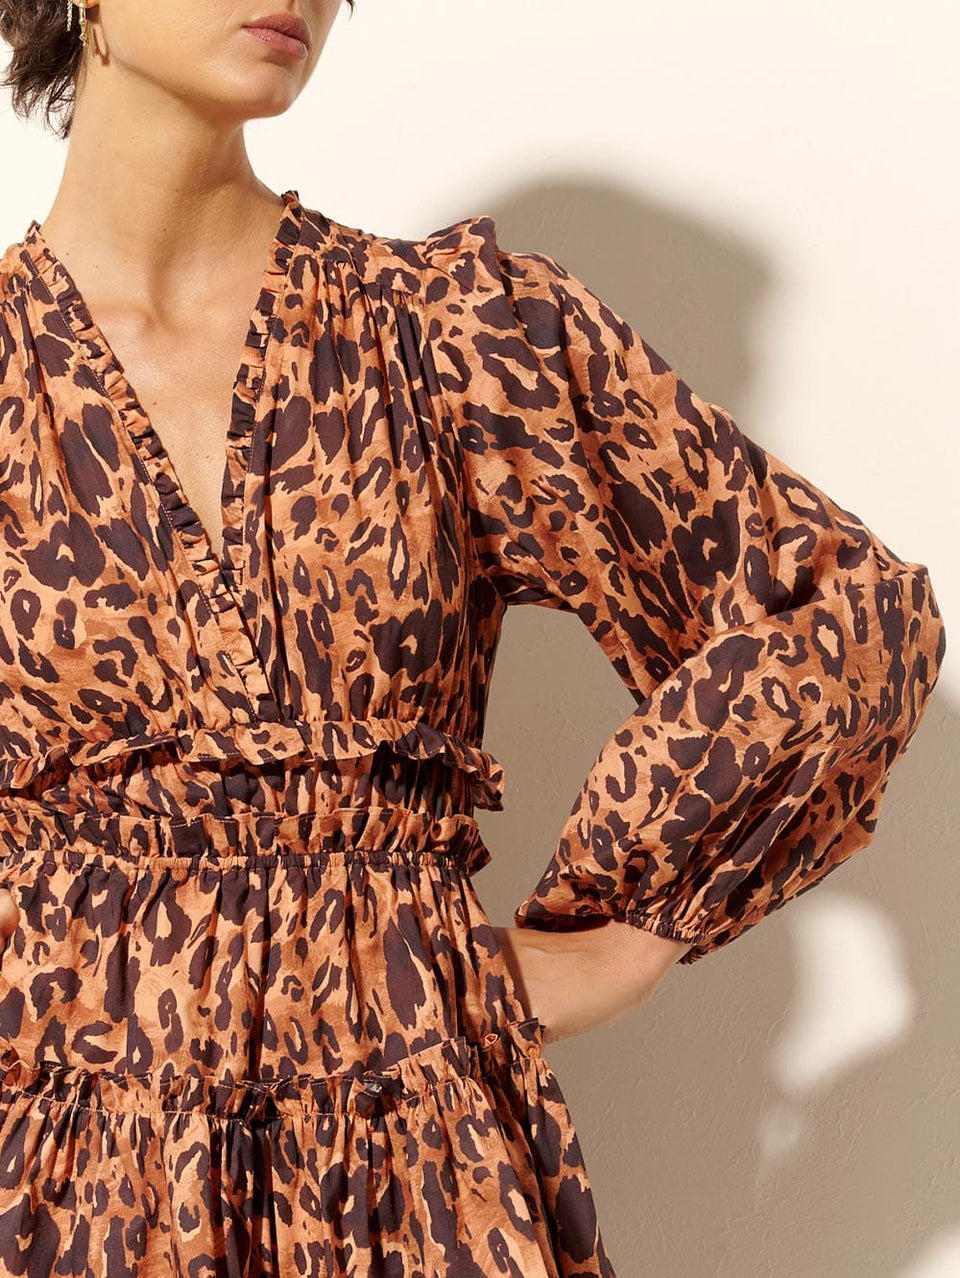 Madison Mini Dress KIVARI | Model wears orange and brown leopard mini dress detail shot